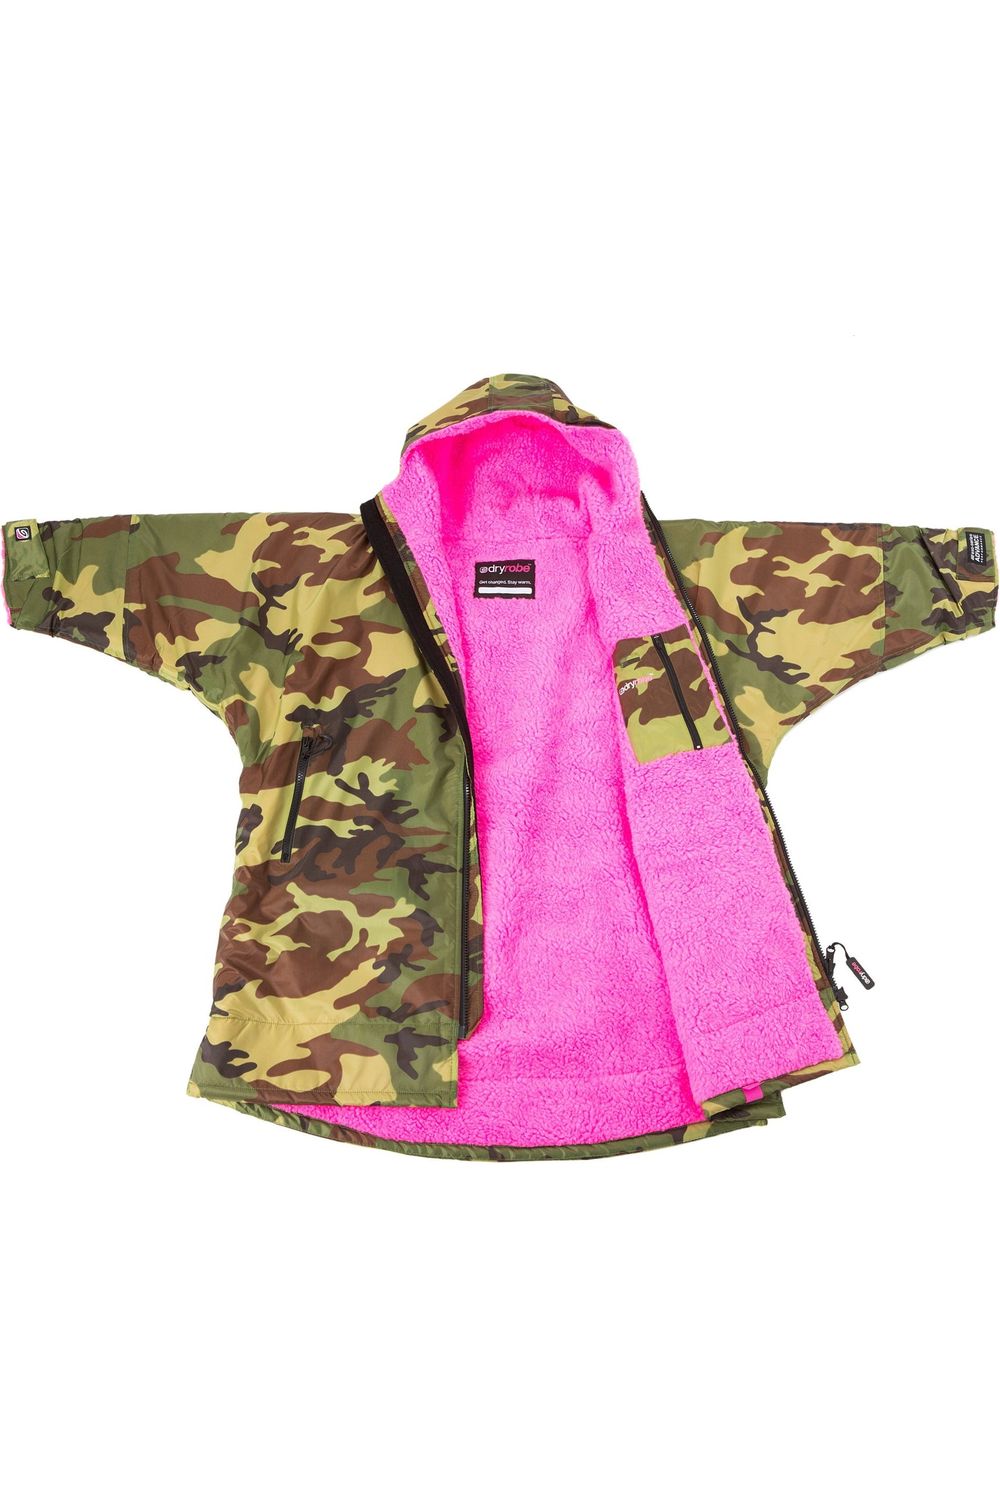 Dryrobe Advance Kids Long Sleeve Camo/Pink